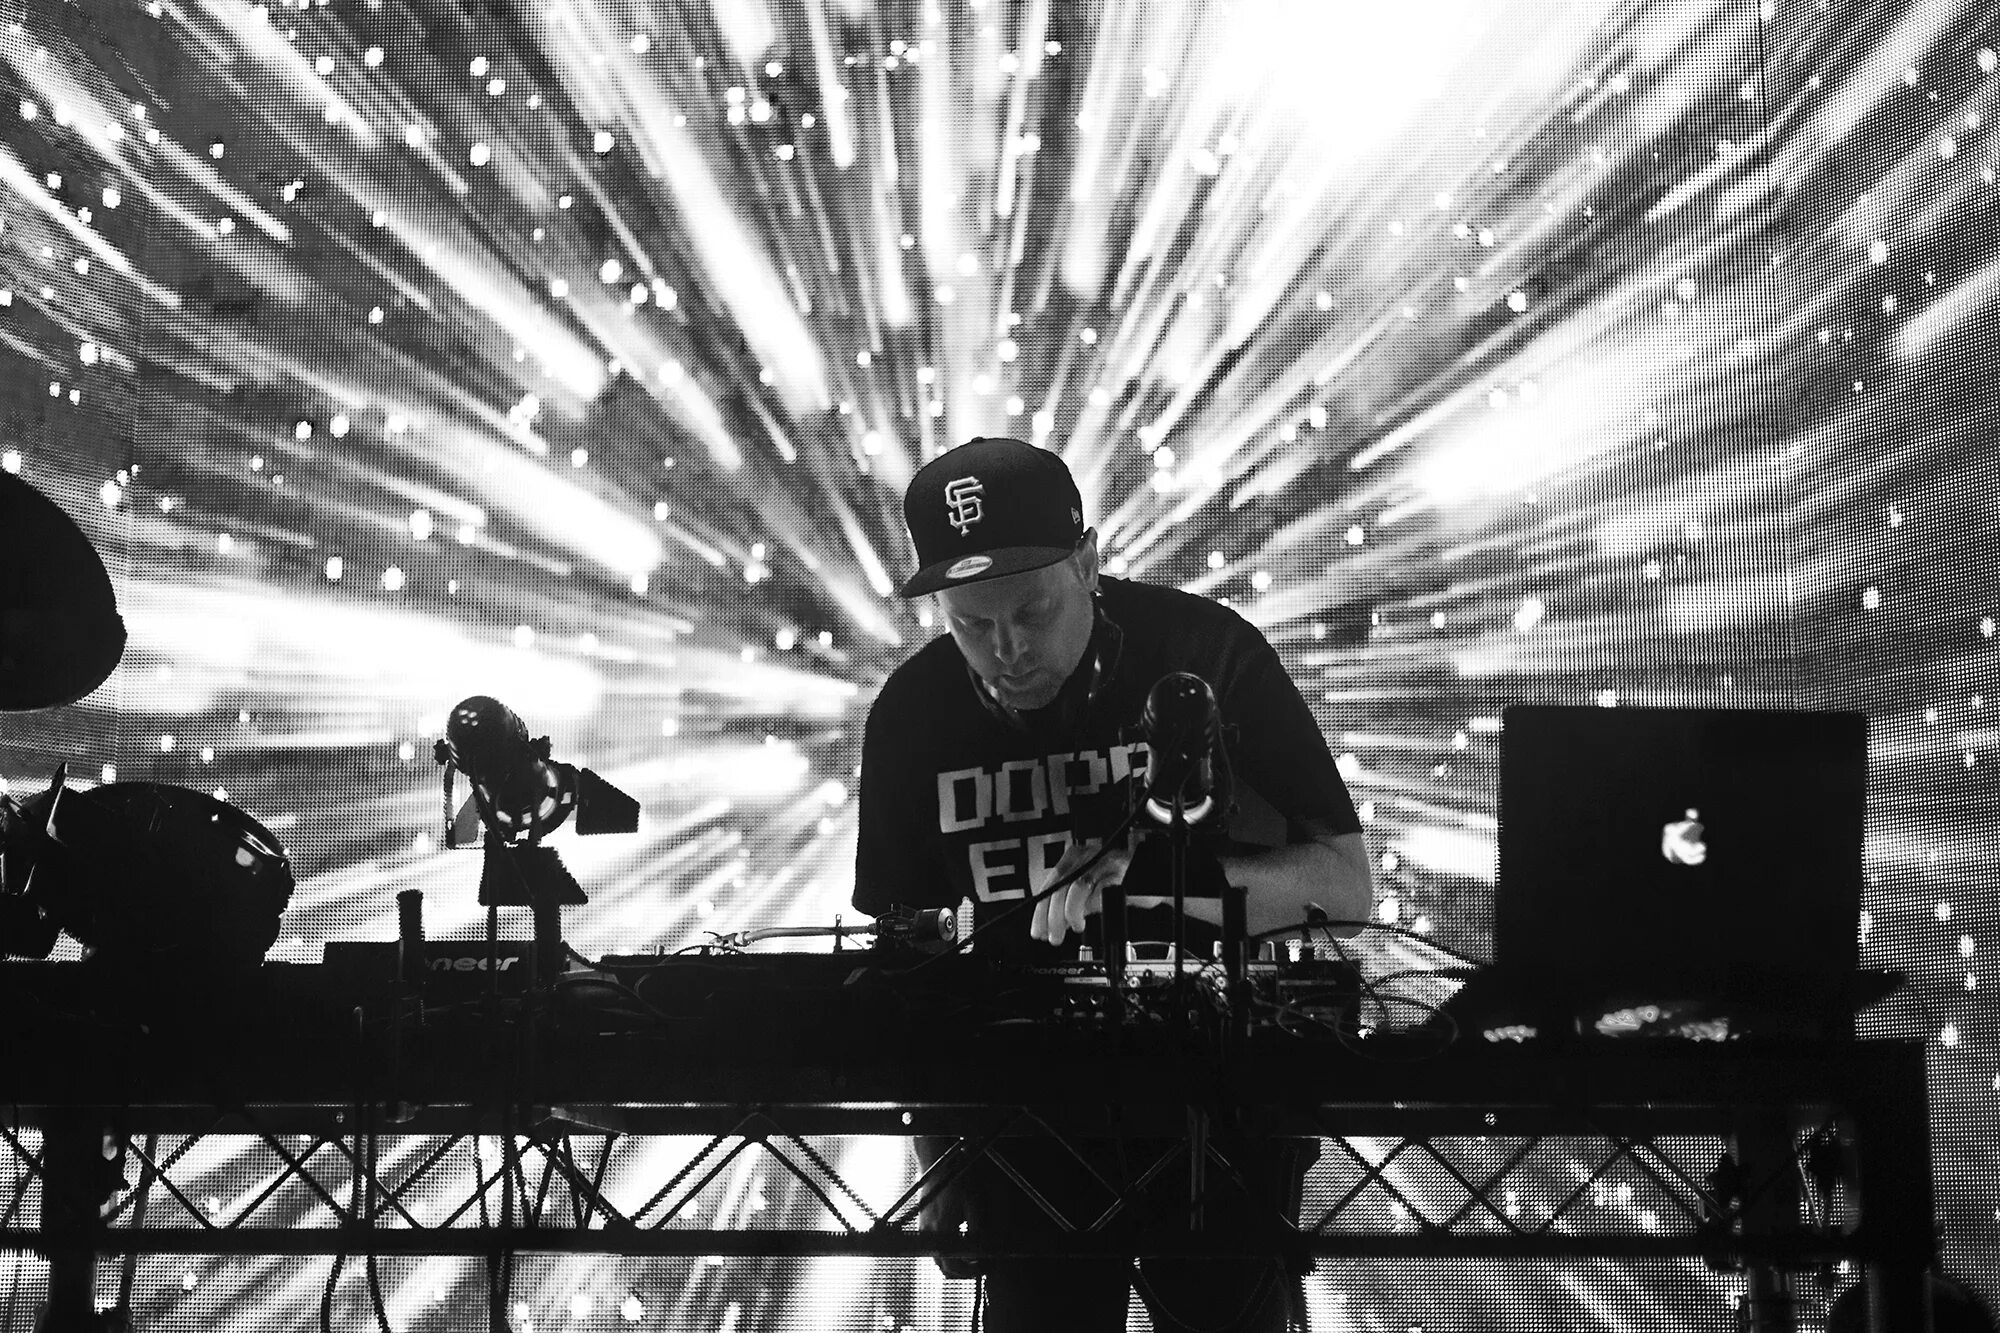 Unkle and DJ Shadow. DJ Shadow "Endtroducing". DJ Shadow фото. Фотография тени диджеев.